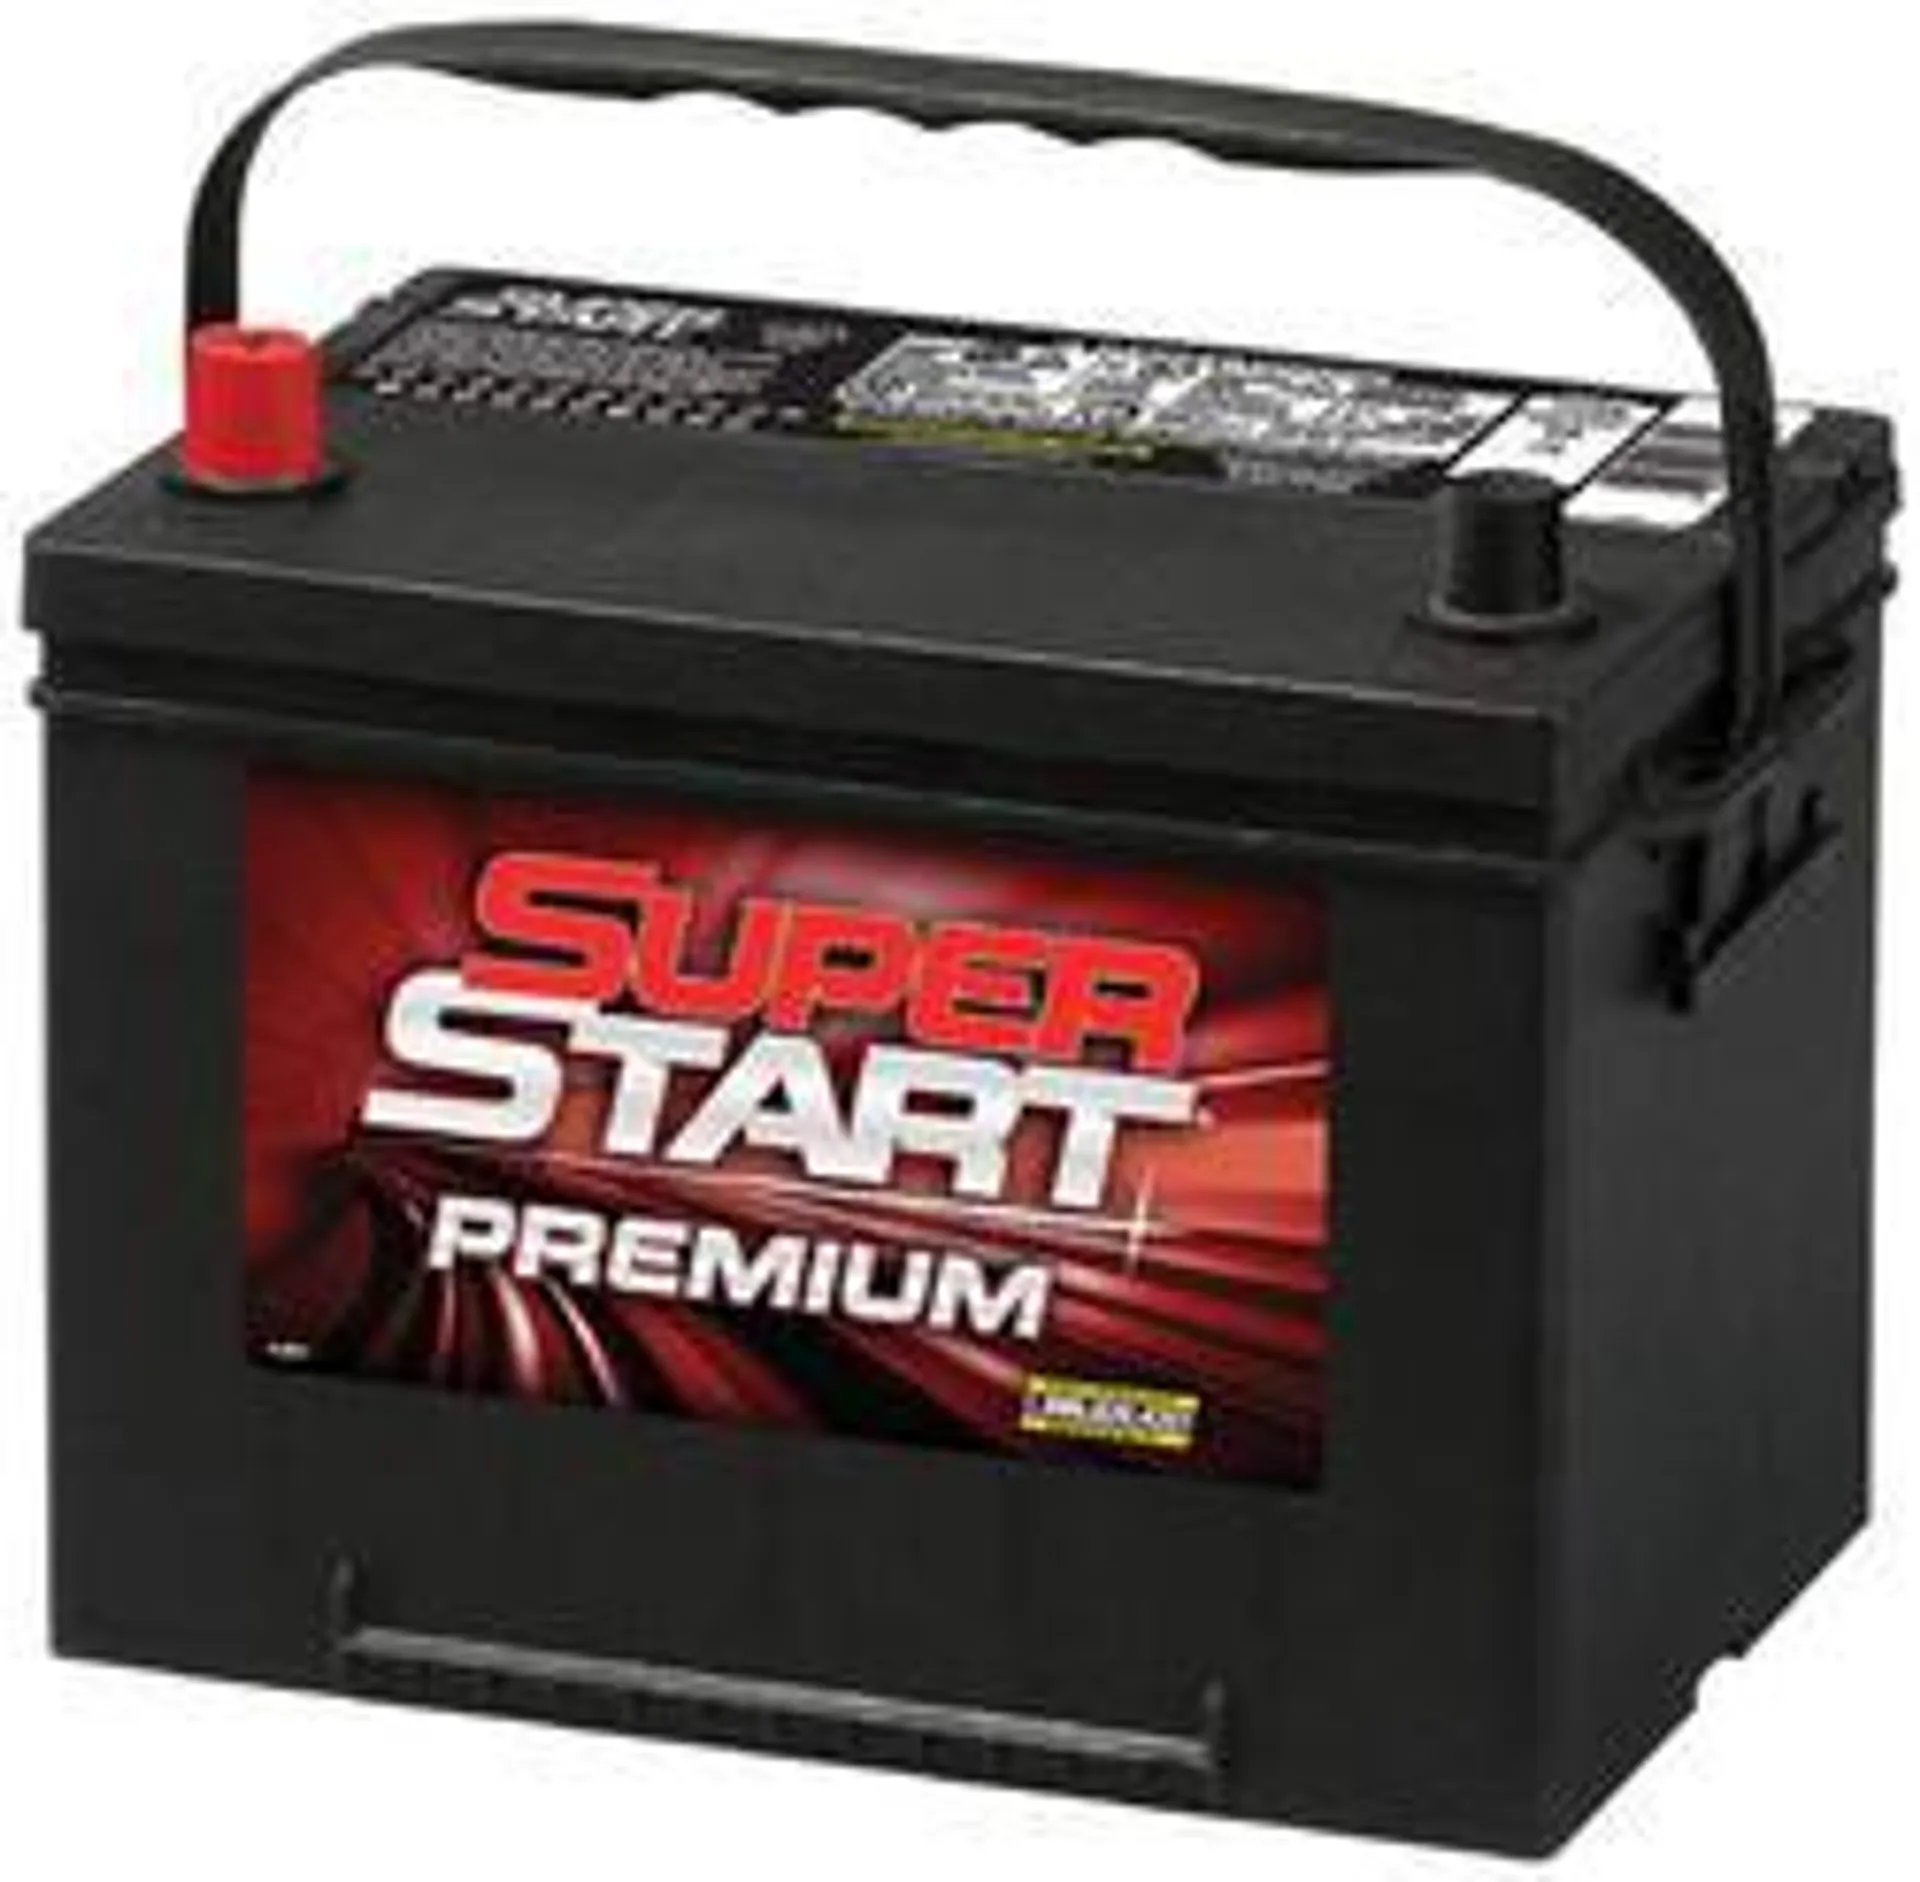 Super Start Premium Battery Group Size 34 - 34PRM